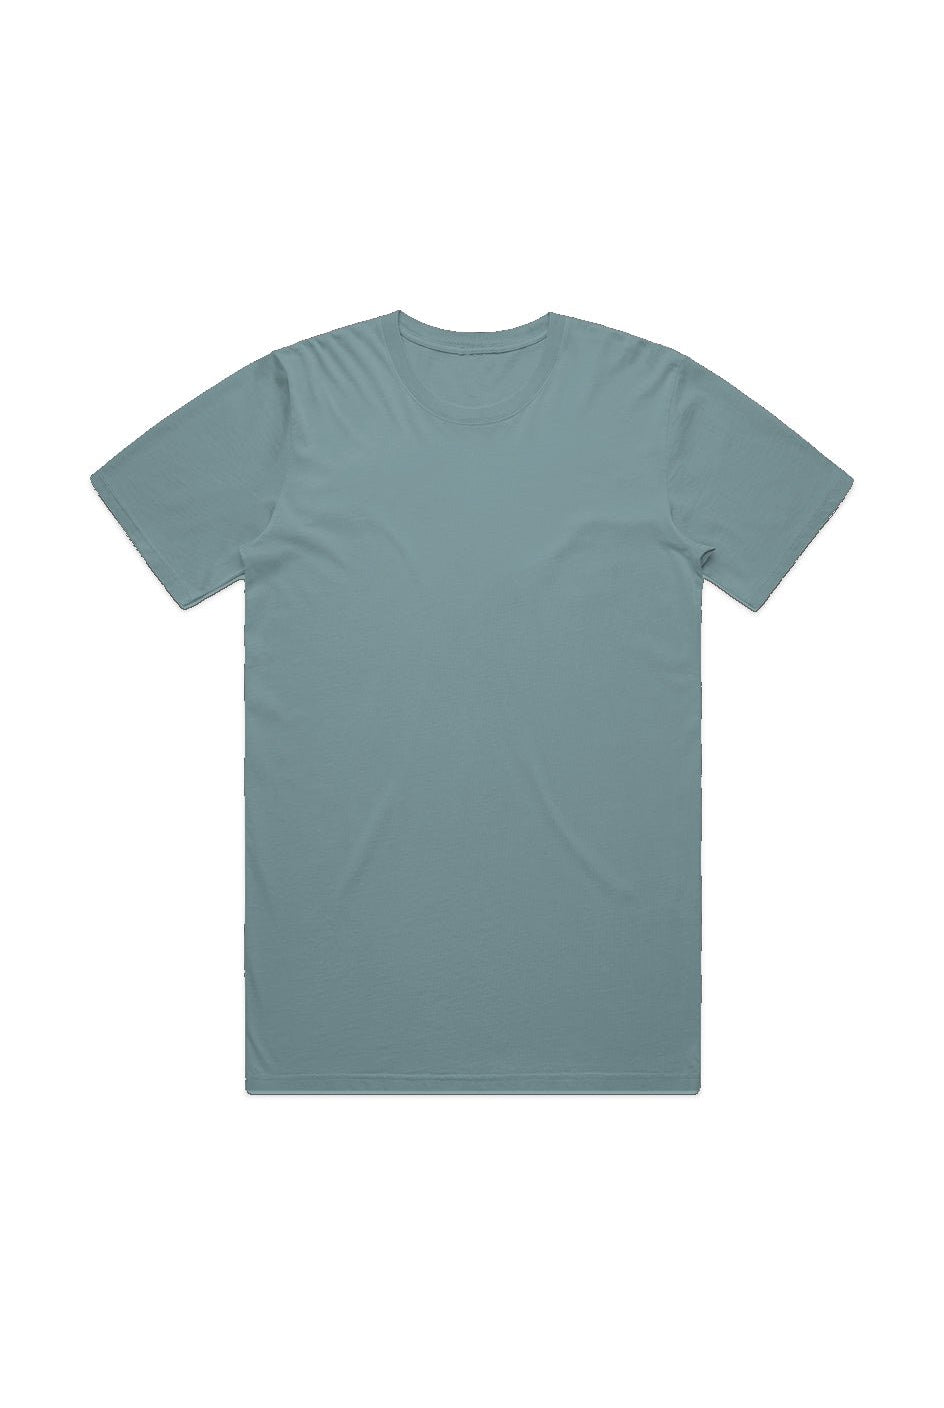 Men's Premium Faded Slate T-shirt - Men's T-Shirts - Apliiq - Men's Premium Faded Slate T-shirt - APQ-4662479S6A0 - s - Faded Slate - Dragon Foxx™ - Dragon Foxx™ Men's Premium Faded Slate T-shirt - Dragon Foxx™ Men's Shirts